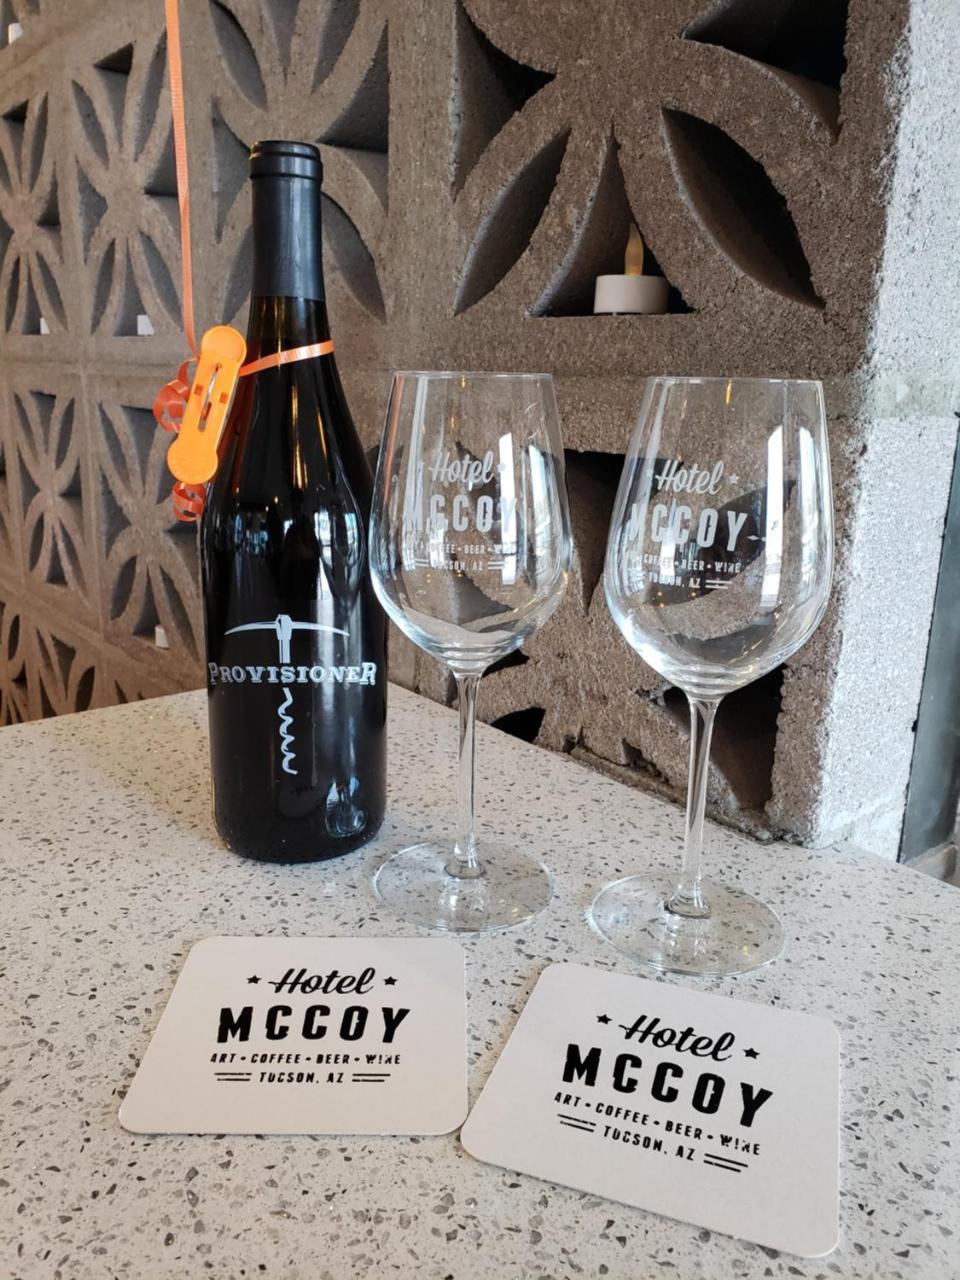 Hotel Mccoy - Art, Coffee, Beer, Wine Tucson Exterior photo